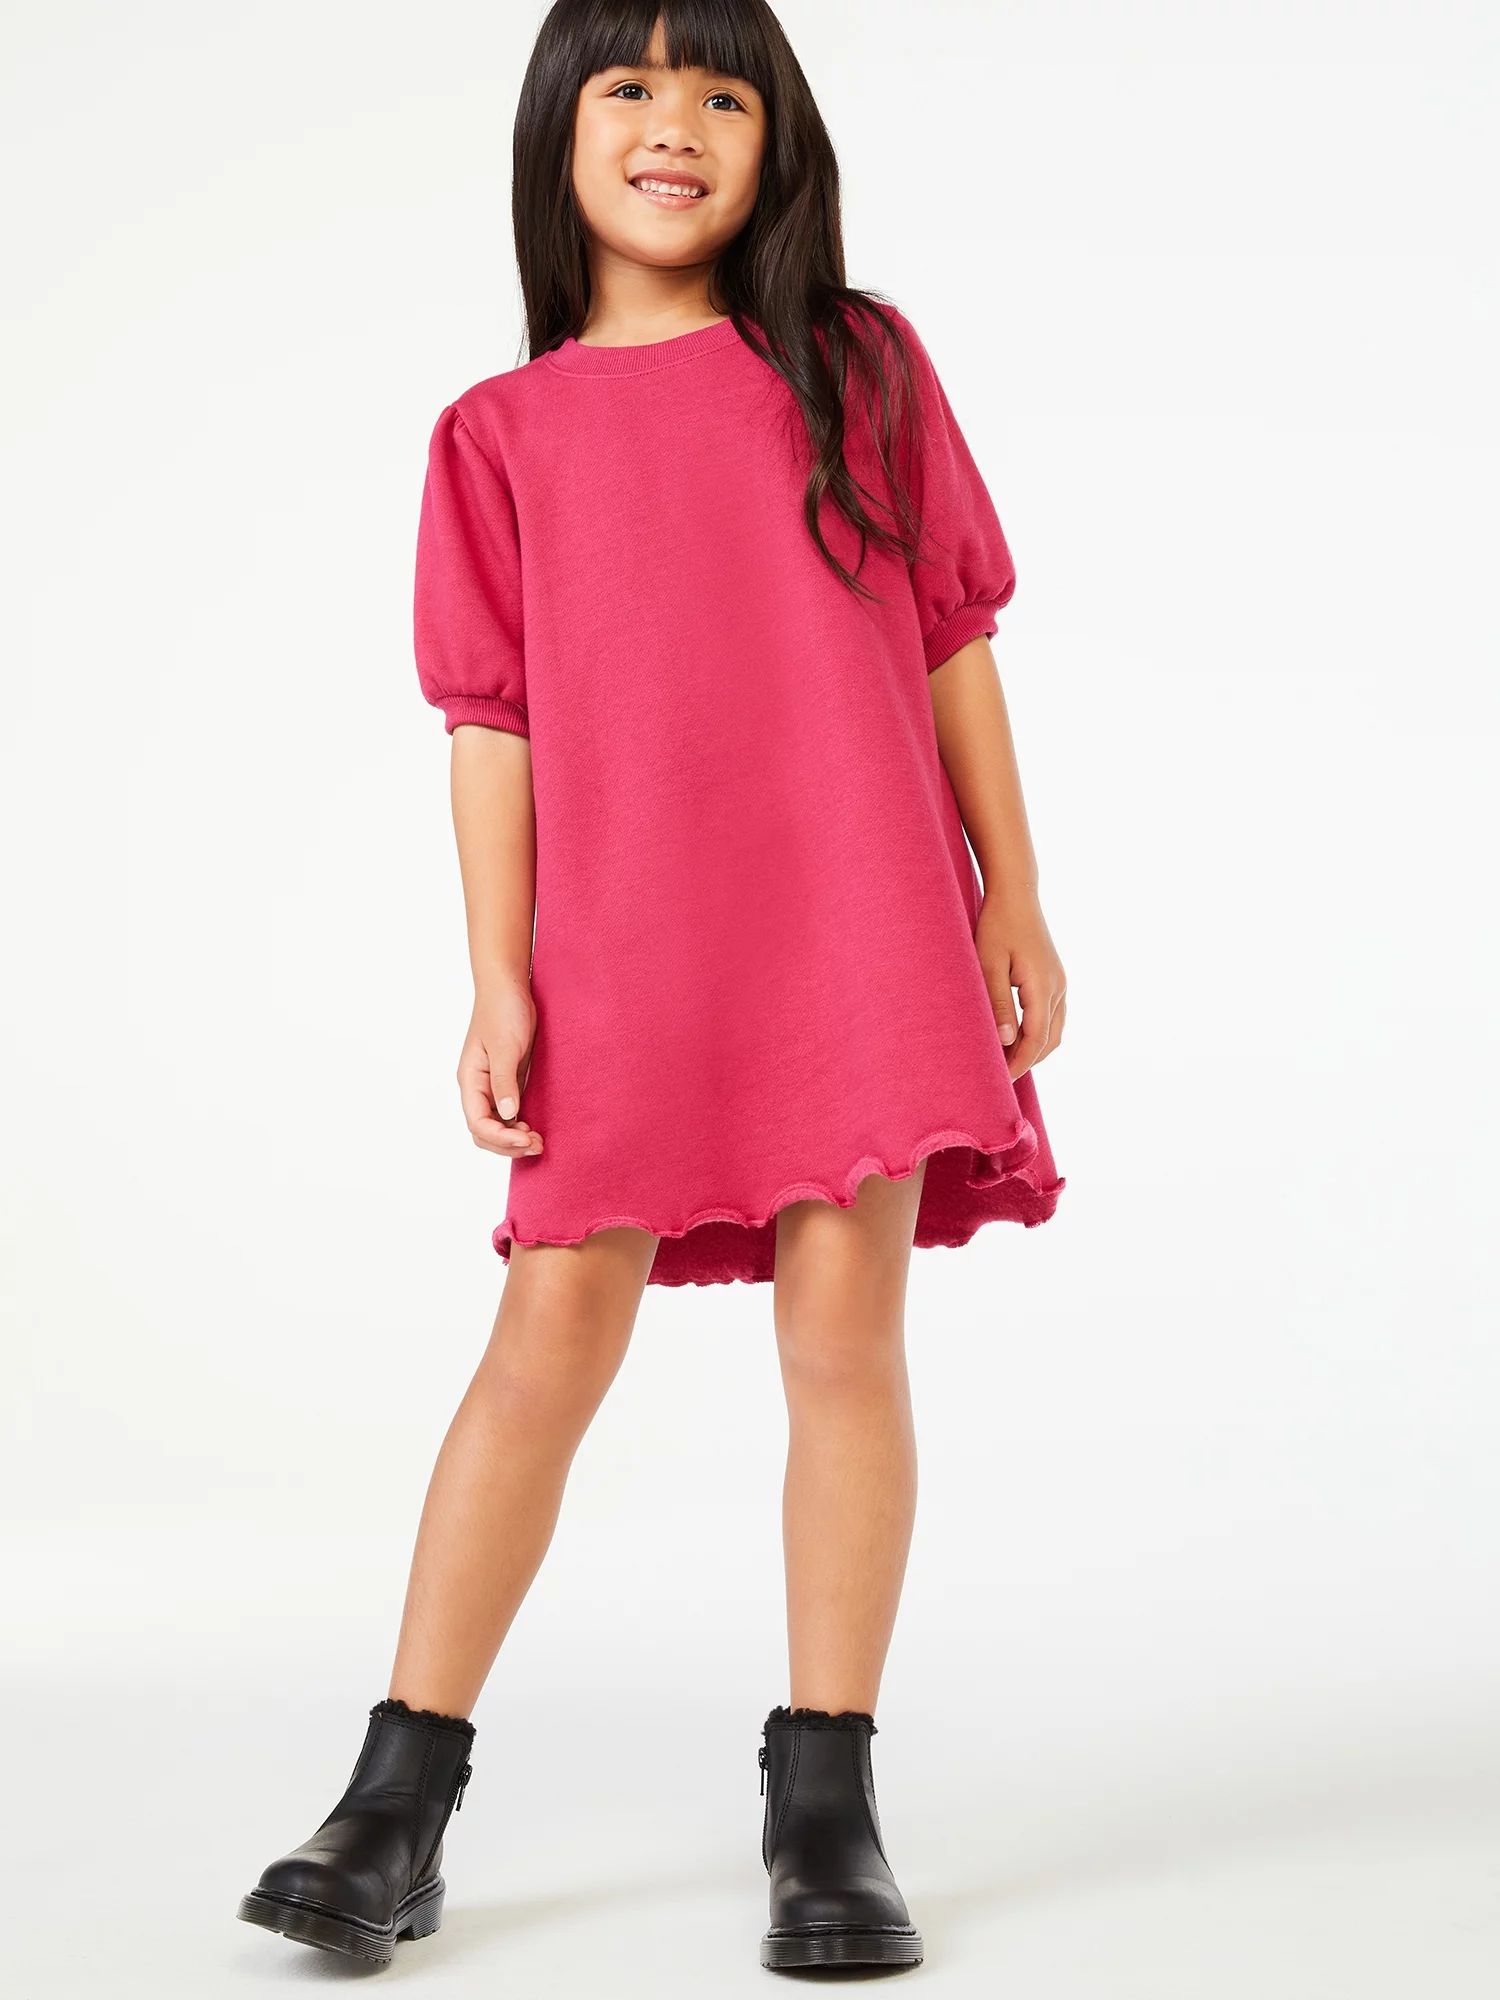 Free Assembly Girls Puff Shoulder Sweatshirt Dress, Sizes 4-18 | Walmart (US)